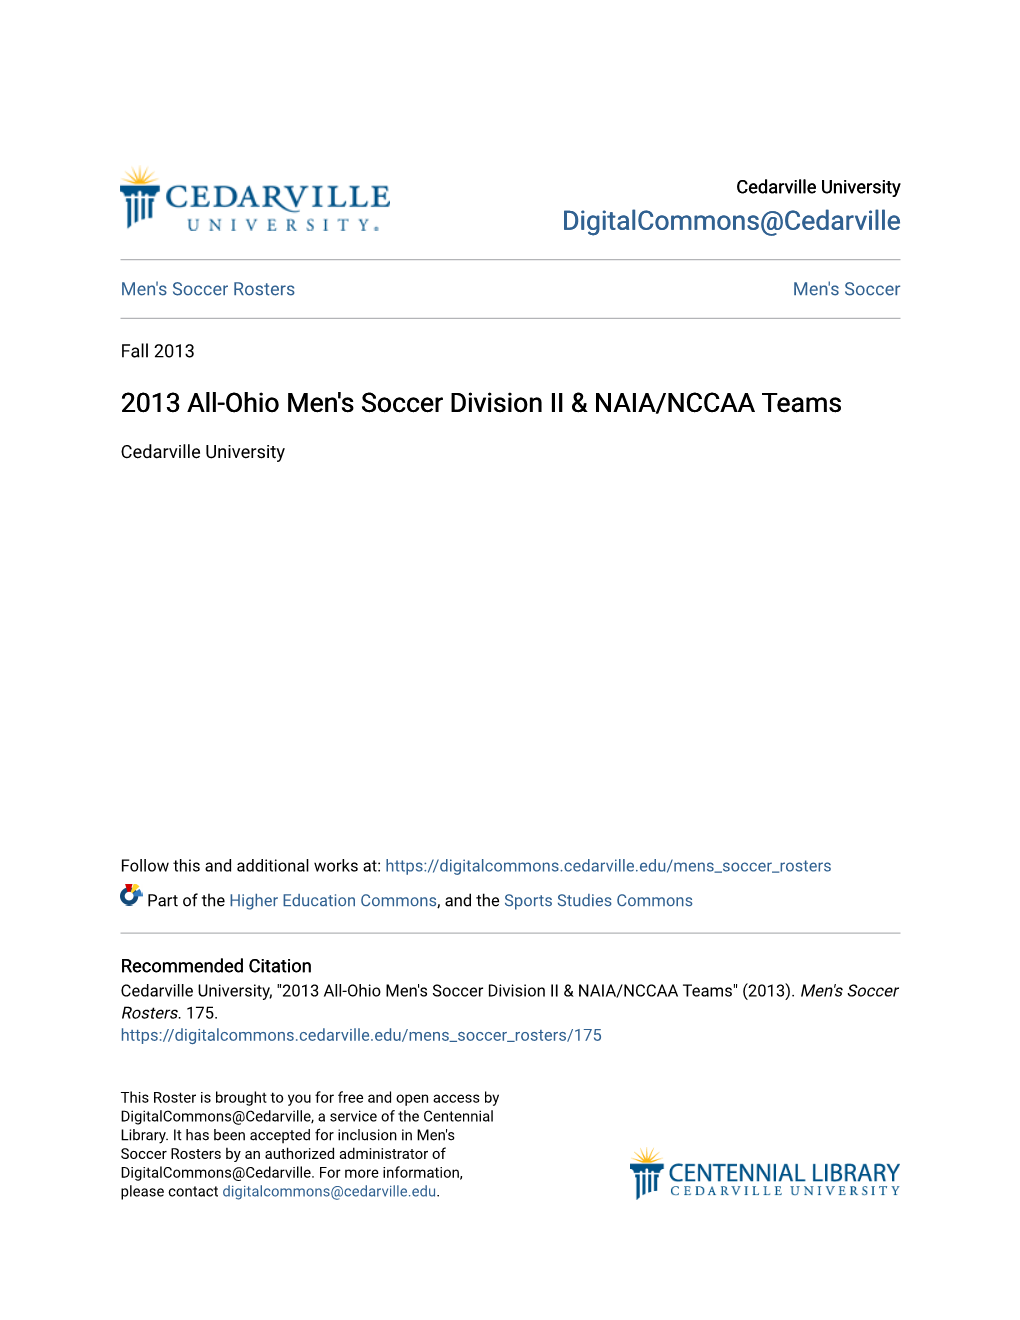 2013 All-Ohio Men's Soccer Division II & NAIA/NCCAA Teams